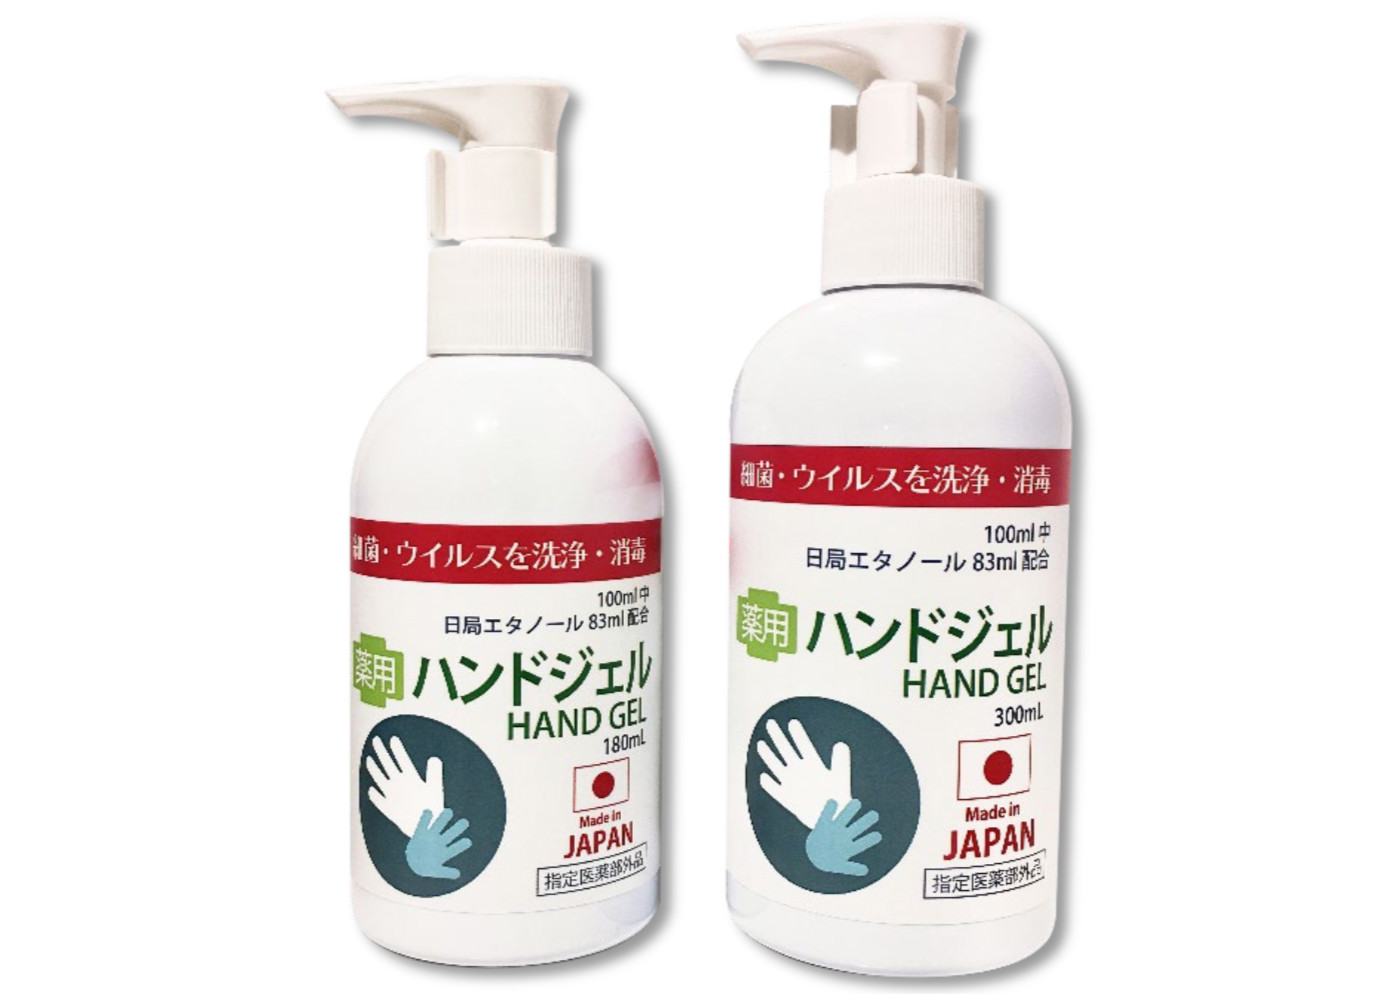 92%OFF!】 安心の日本製ハンドジェル 薬用 アルコールジェル CB 180ml アルコール消毒で手指の洗浄